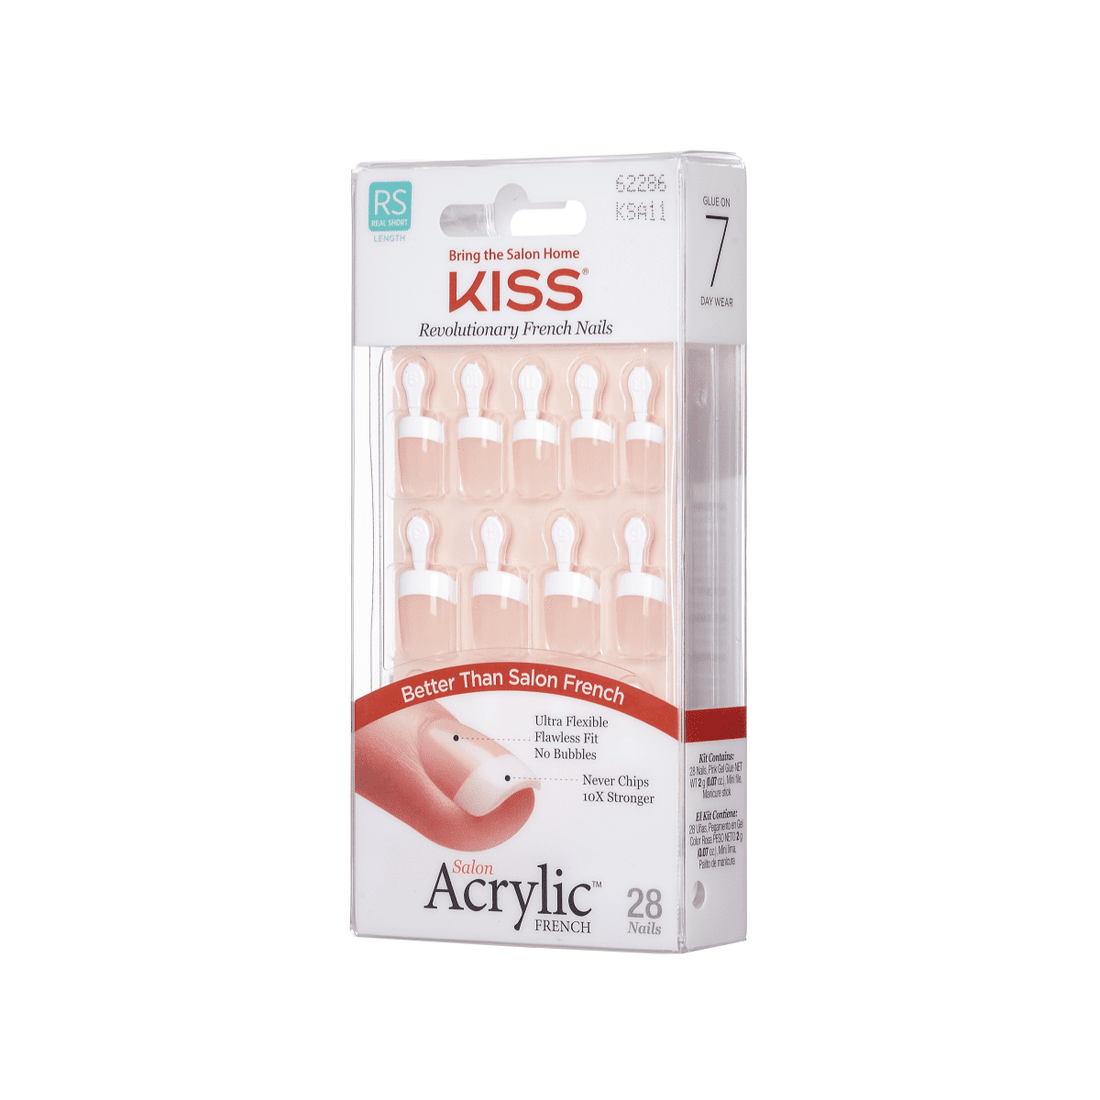 KISS Salon Acrylic French - Power Play